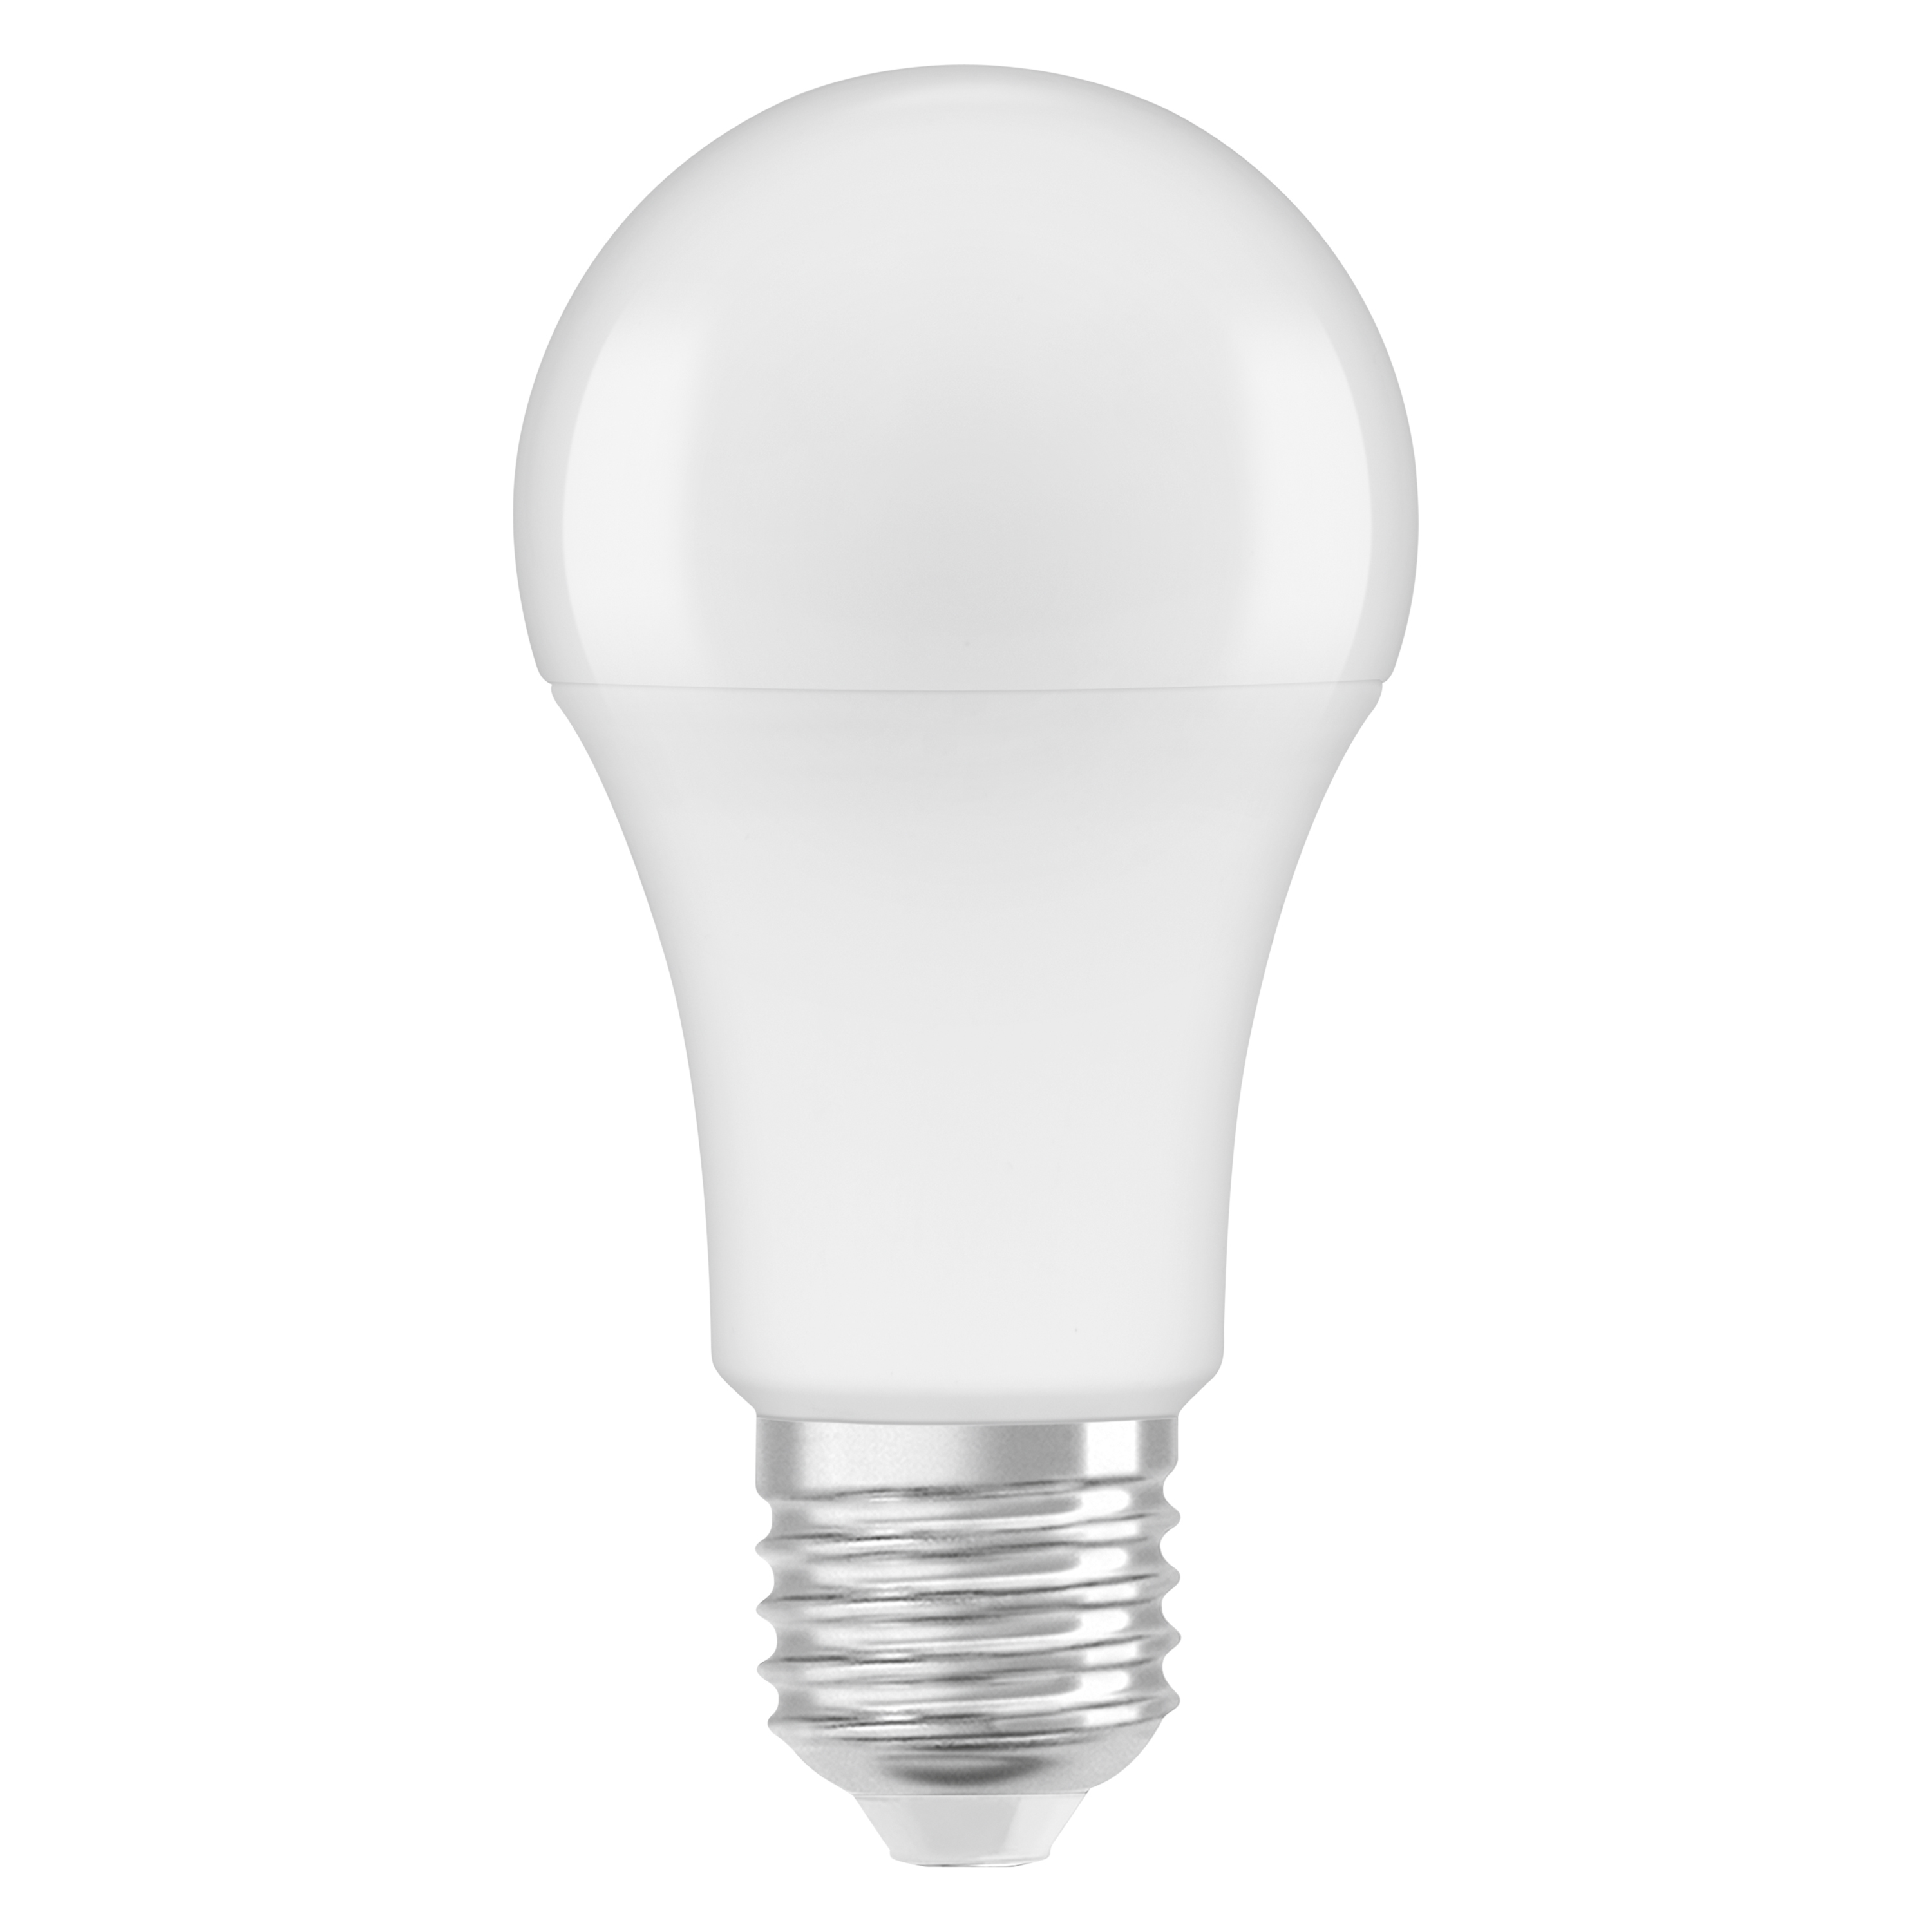 CLA BOX weiß Lumen LED-Lampe LED OSRAM  STAR E27 matt 1521 Warm non-dim 14W/827 1251LM SMD/HeatSink 100